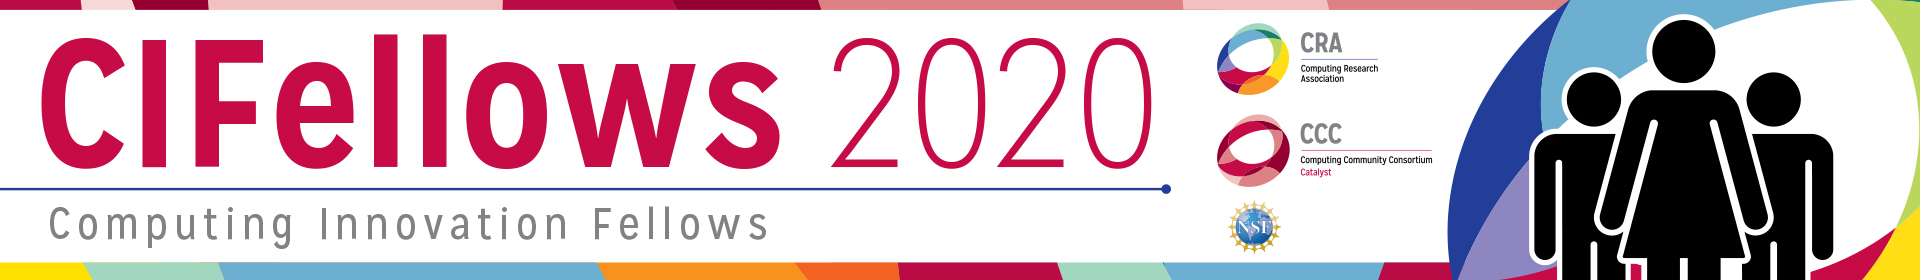 Computing Innovation Fellows Program 2020 Event Banner